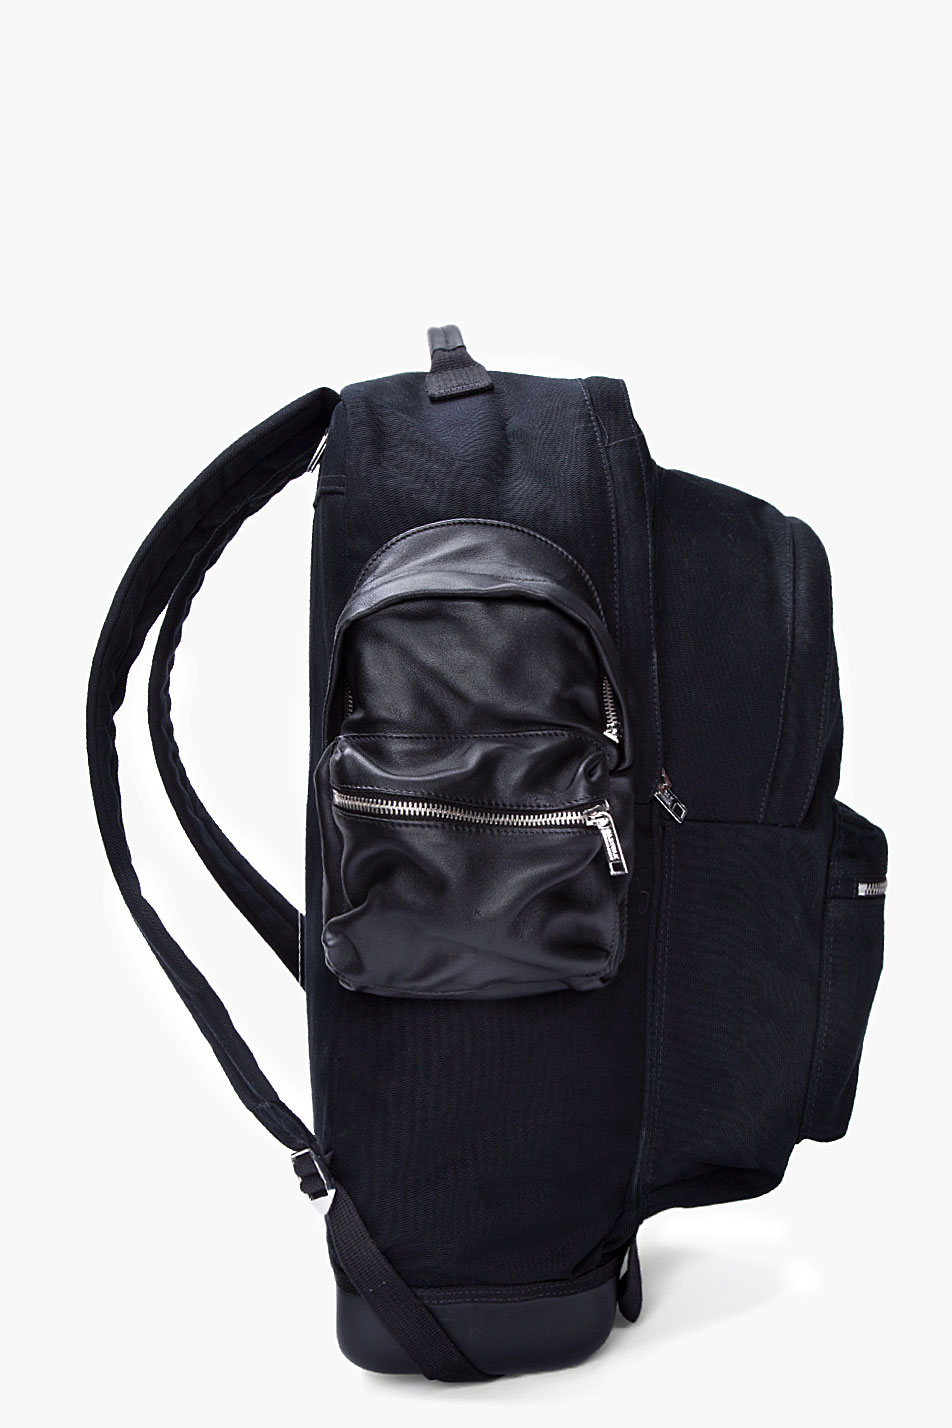 Lyst - Kris Van Assche Black Xxl Hard Shell Base Backpack in Black for Men